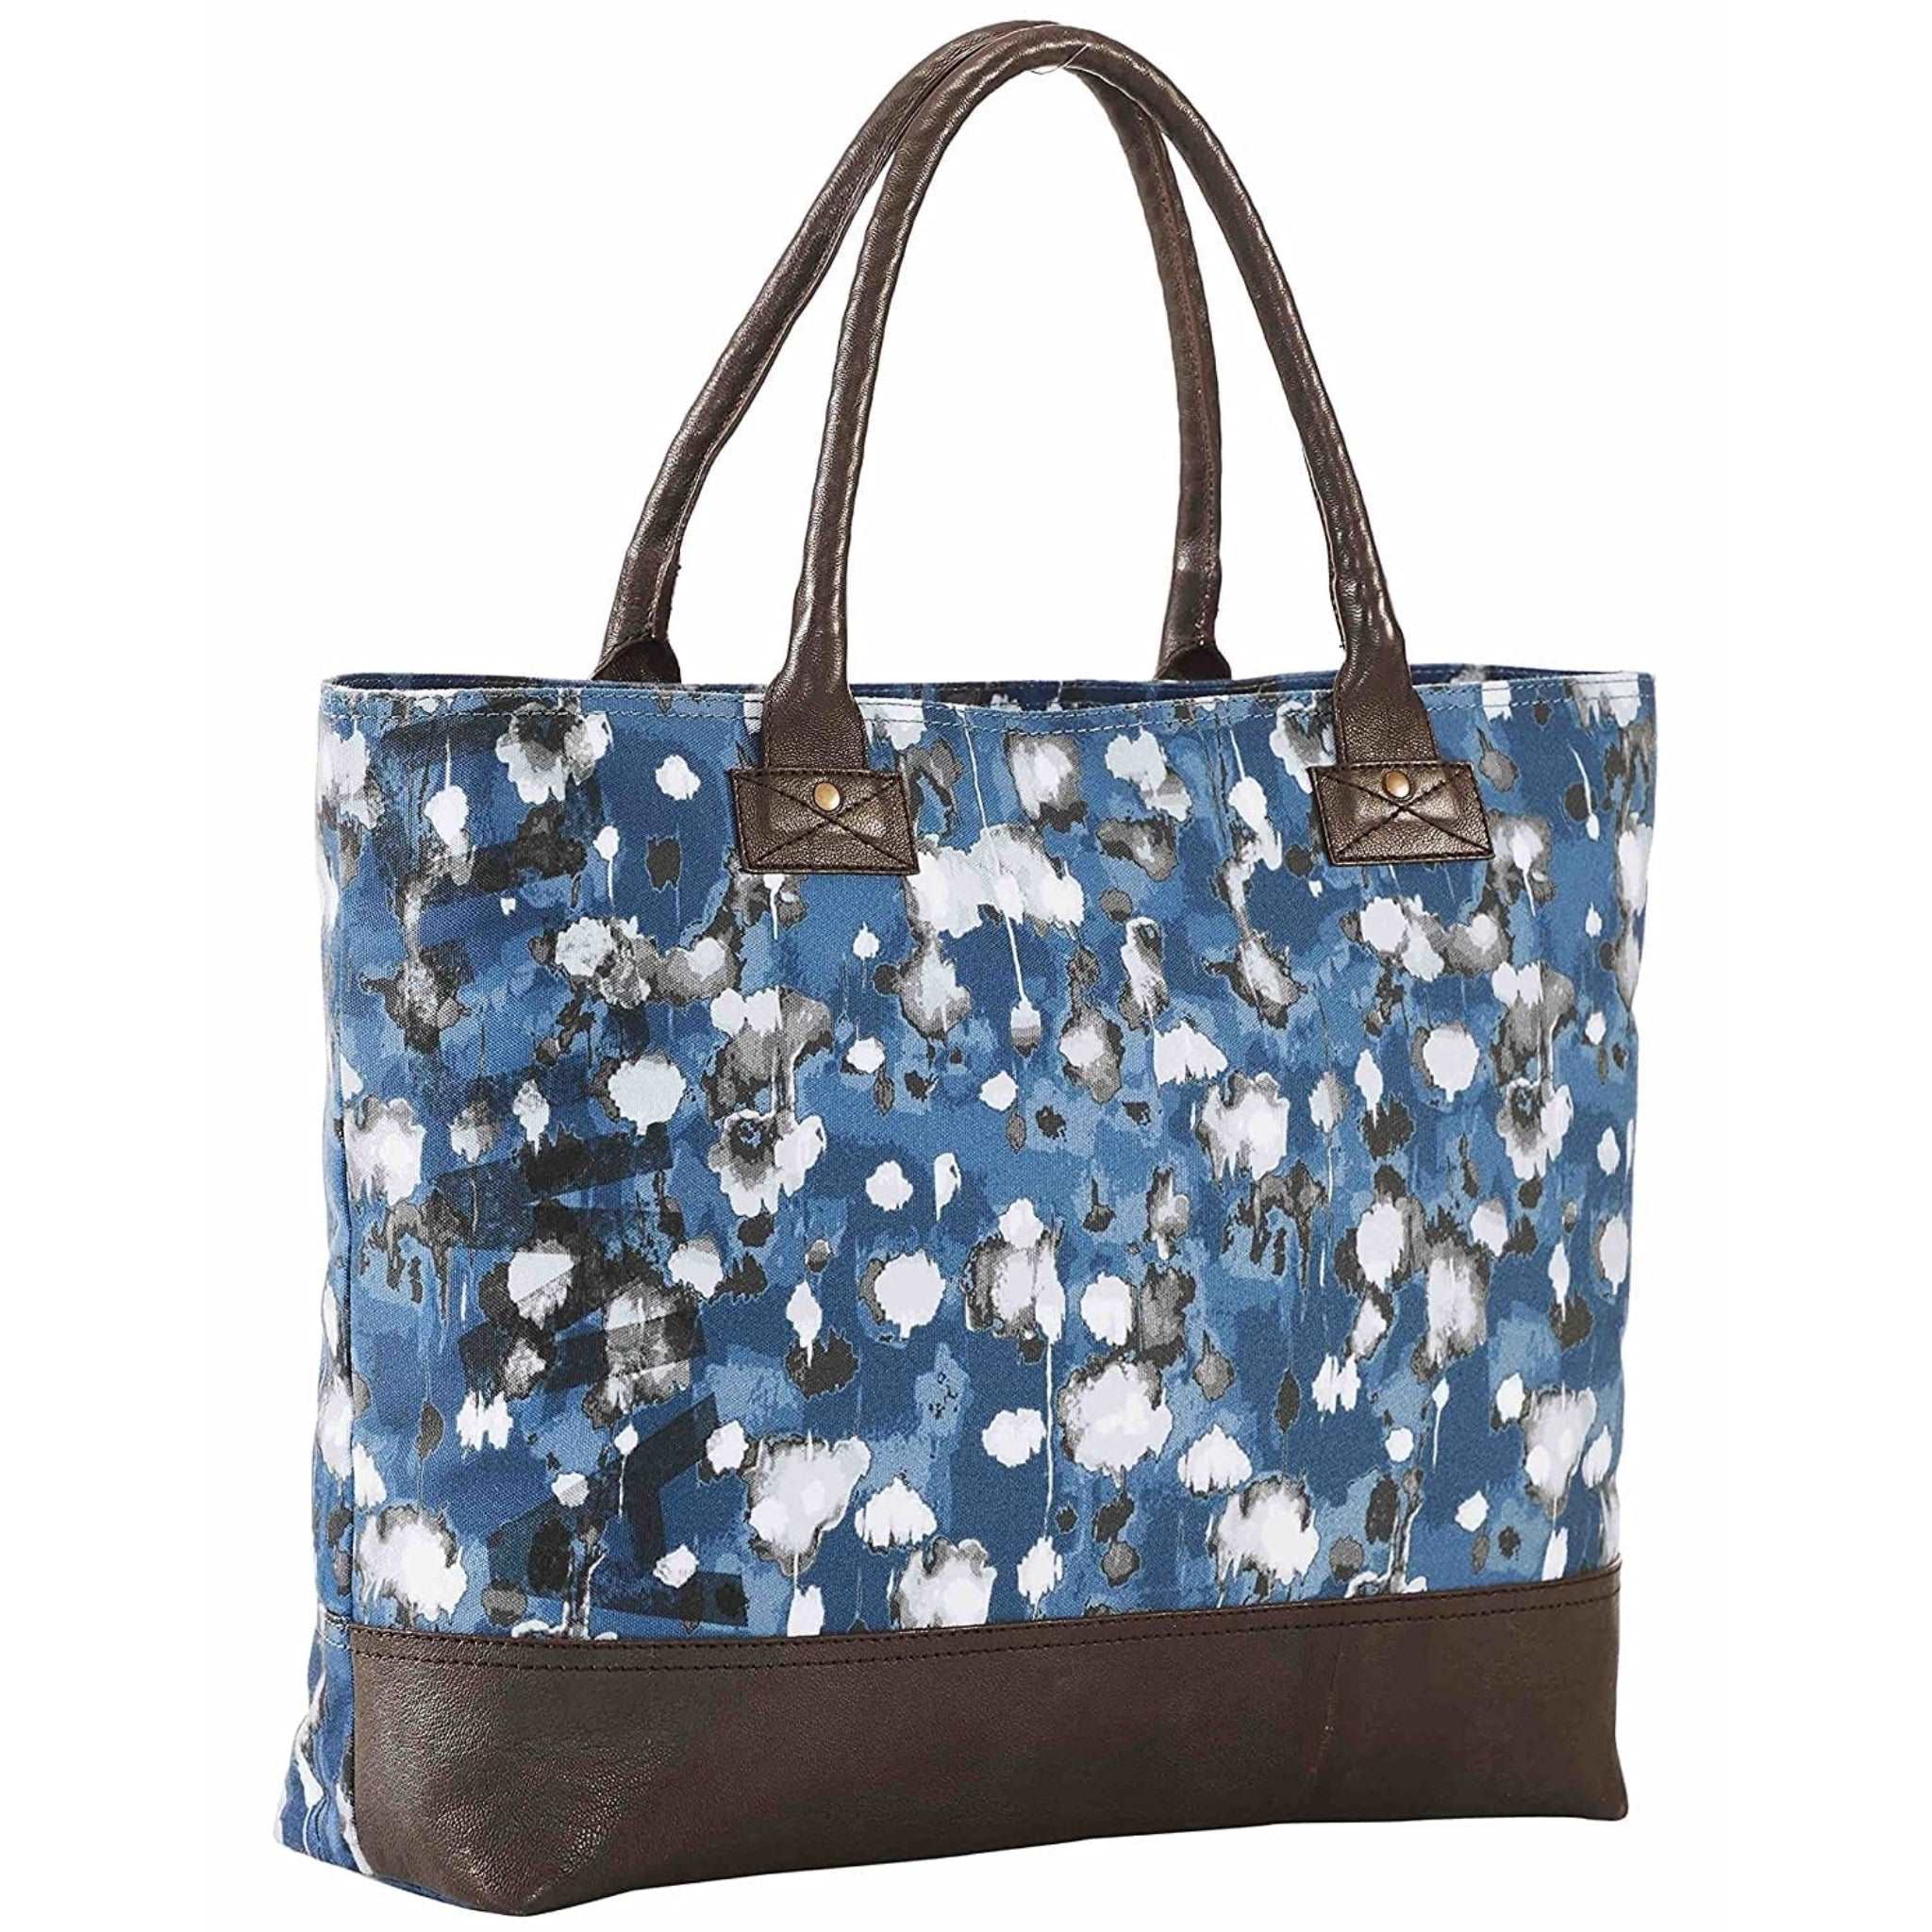 Mona B Blue Large Canvas Handbag for Women | Tote Bag for Grocery, Shopping, Travel | Stylish Vintage Shoulder Bags for Women - Handbag by Mona-B - Backpack, EOSS, Sale, Shop1999, Shop2999, Shop3999